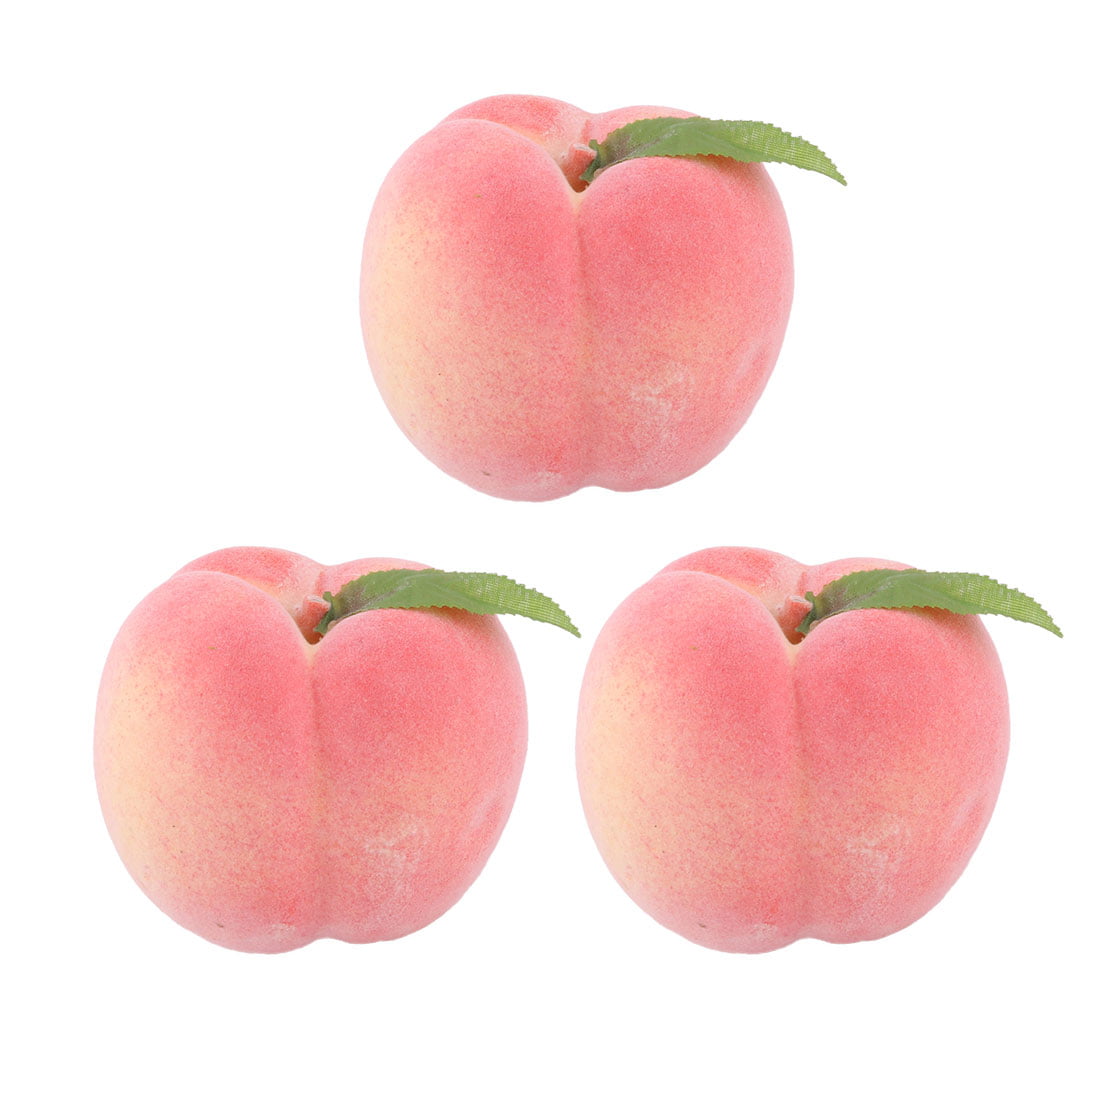 Details about   Foam Simulation Peach Artificial Fruits Lifelike Kitchen Fake Fruit Home Decor 